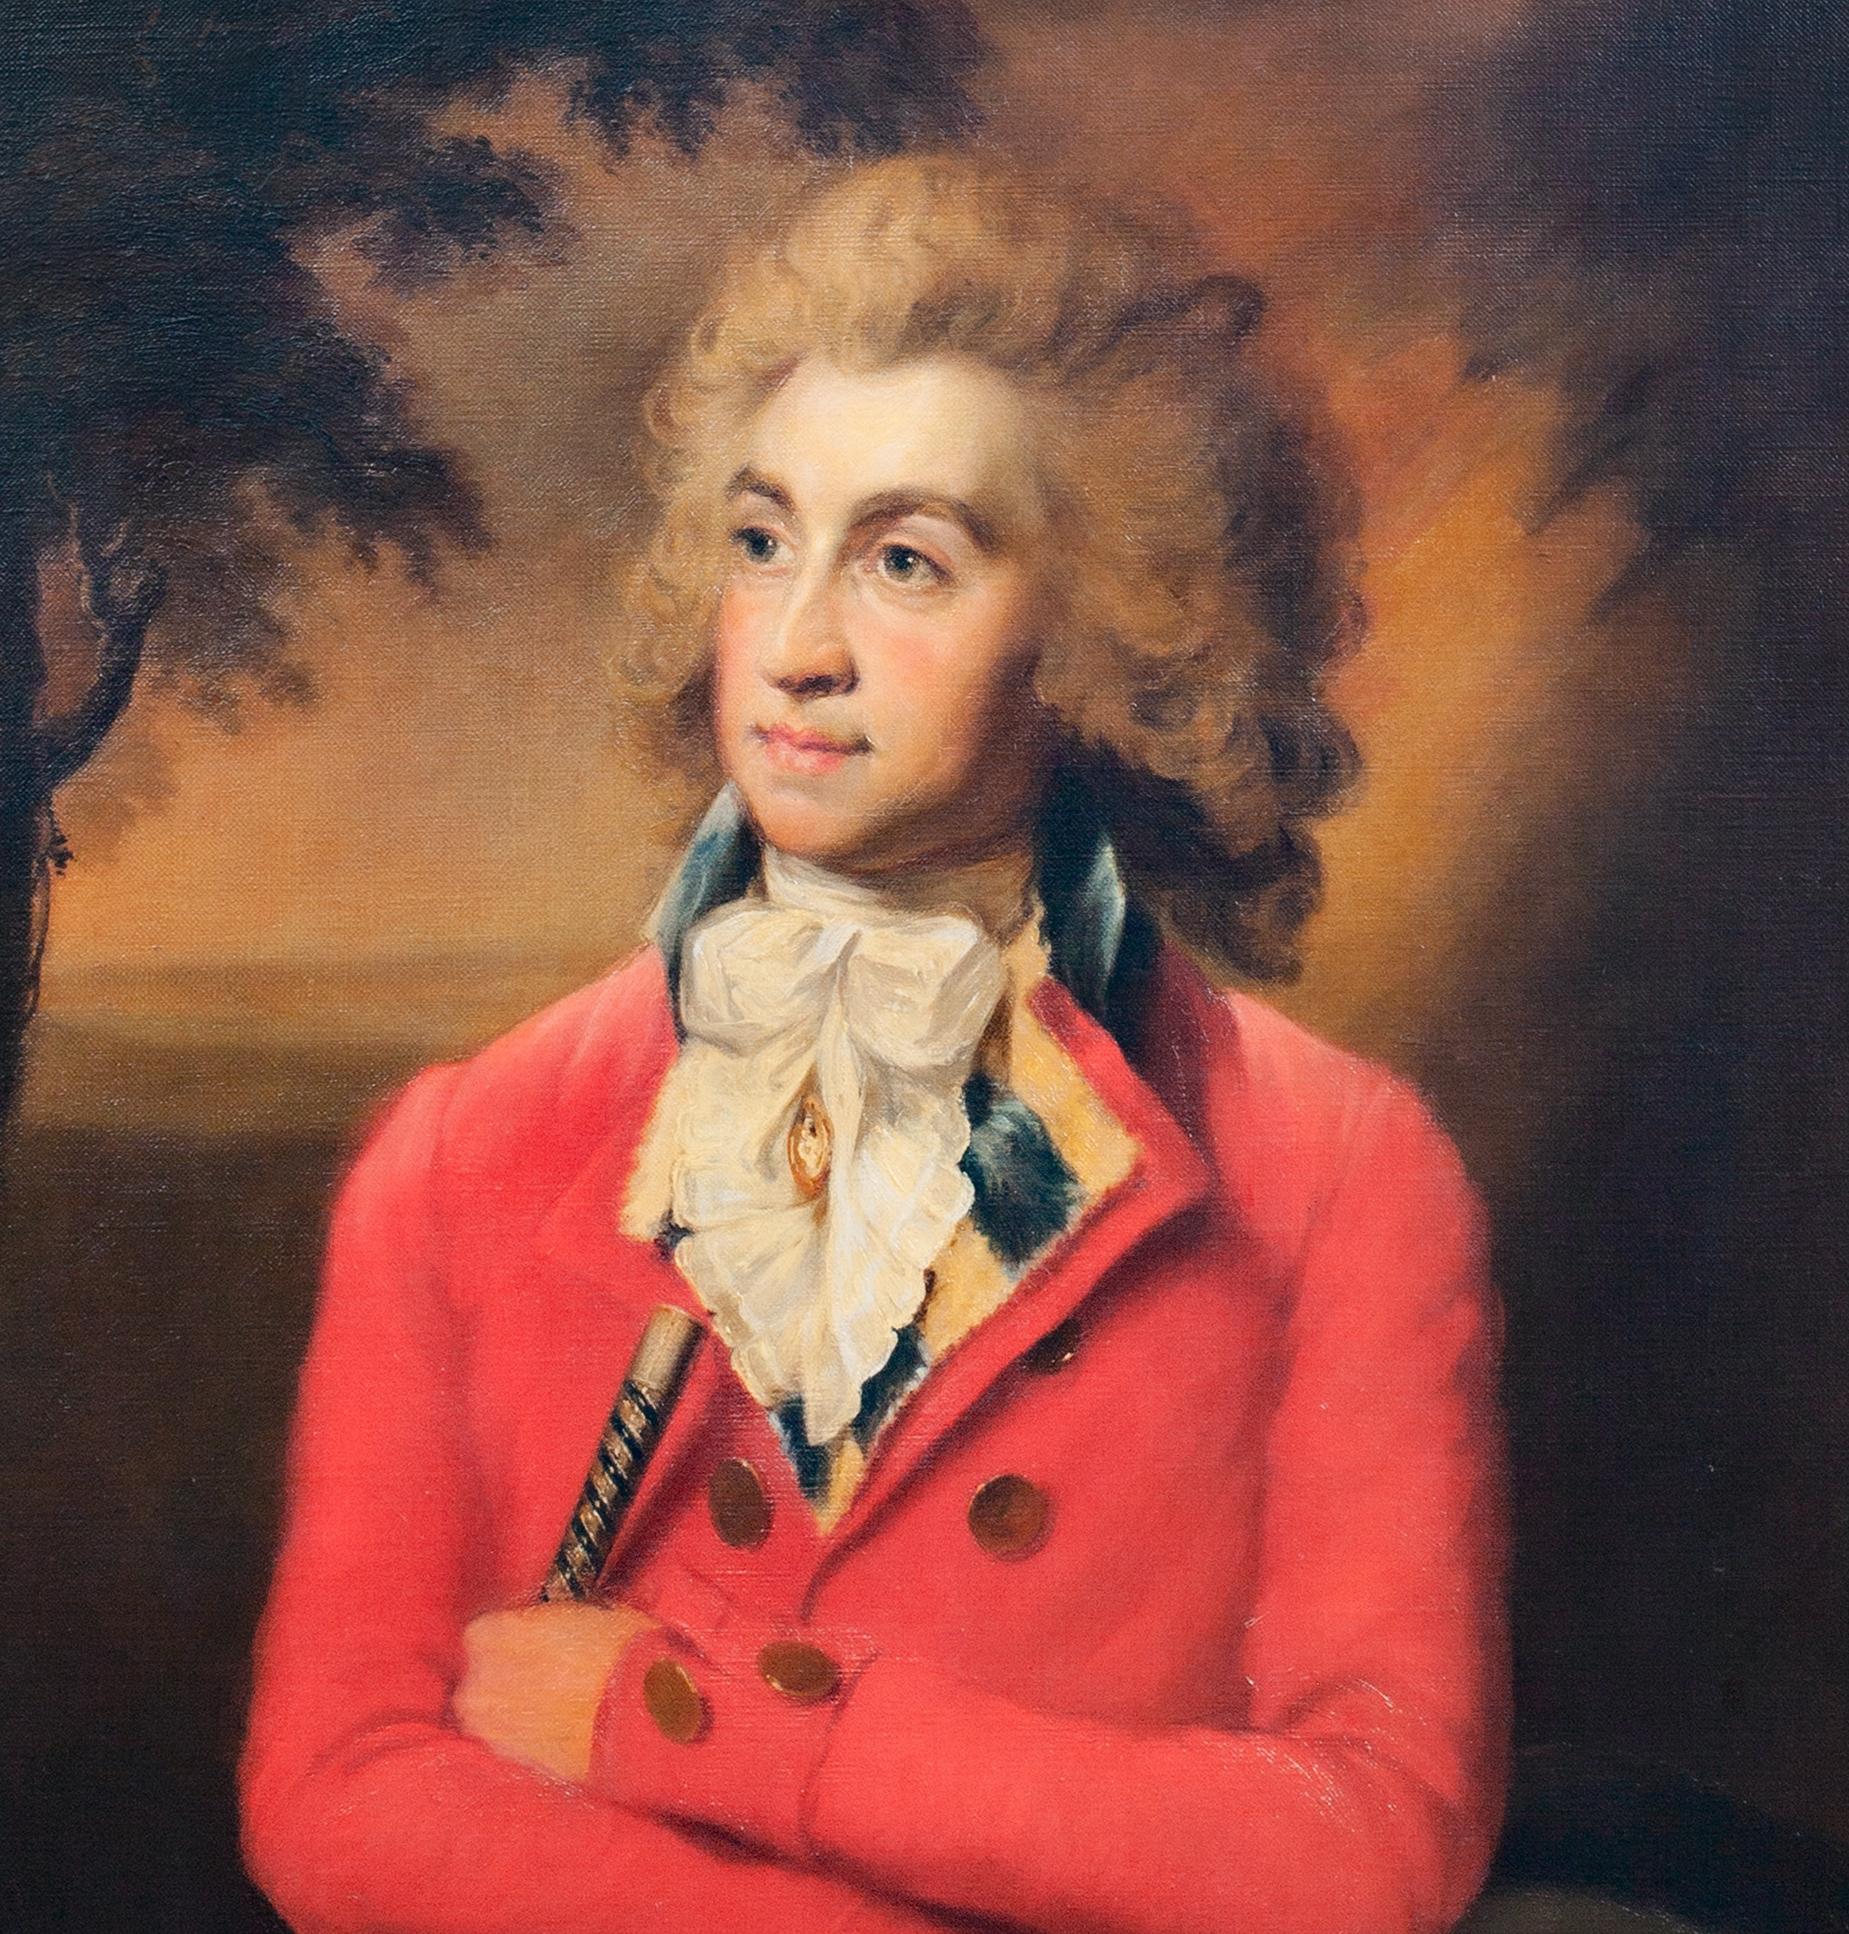 18th century portrait artists